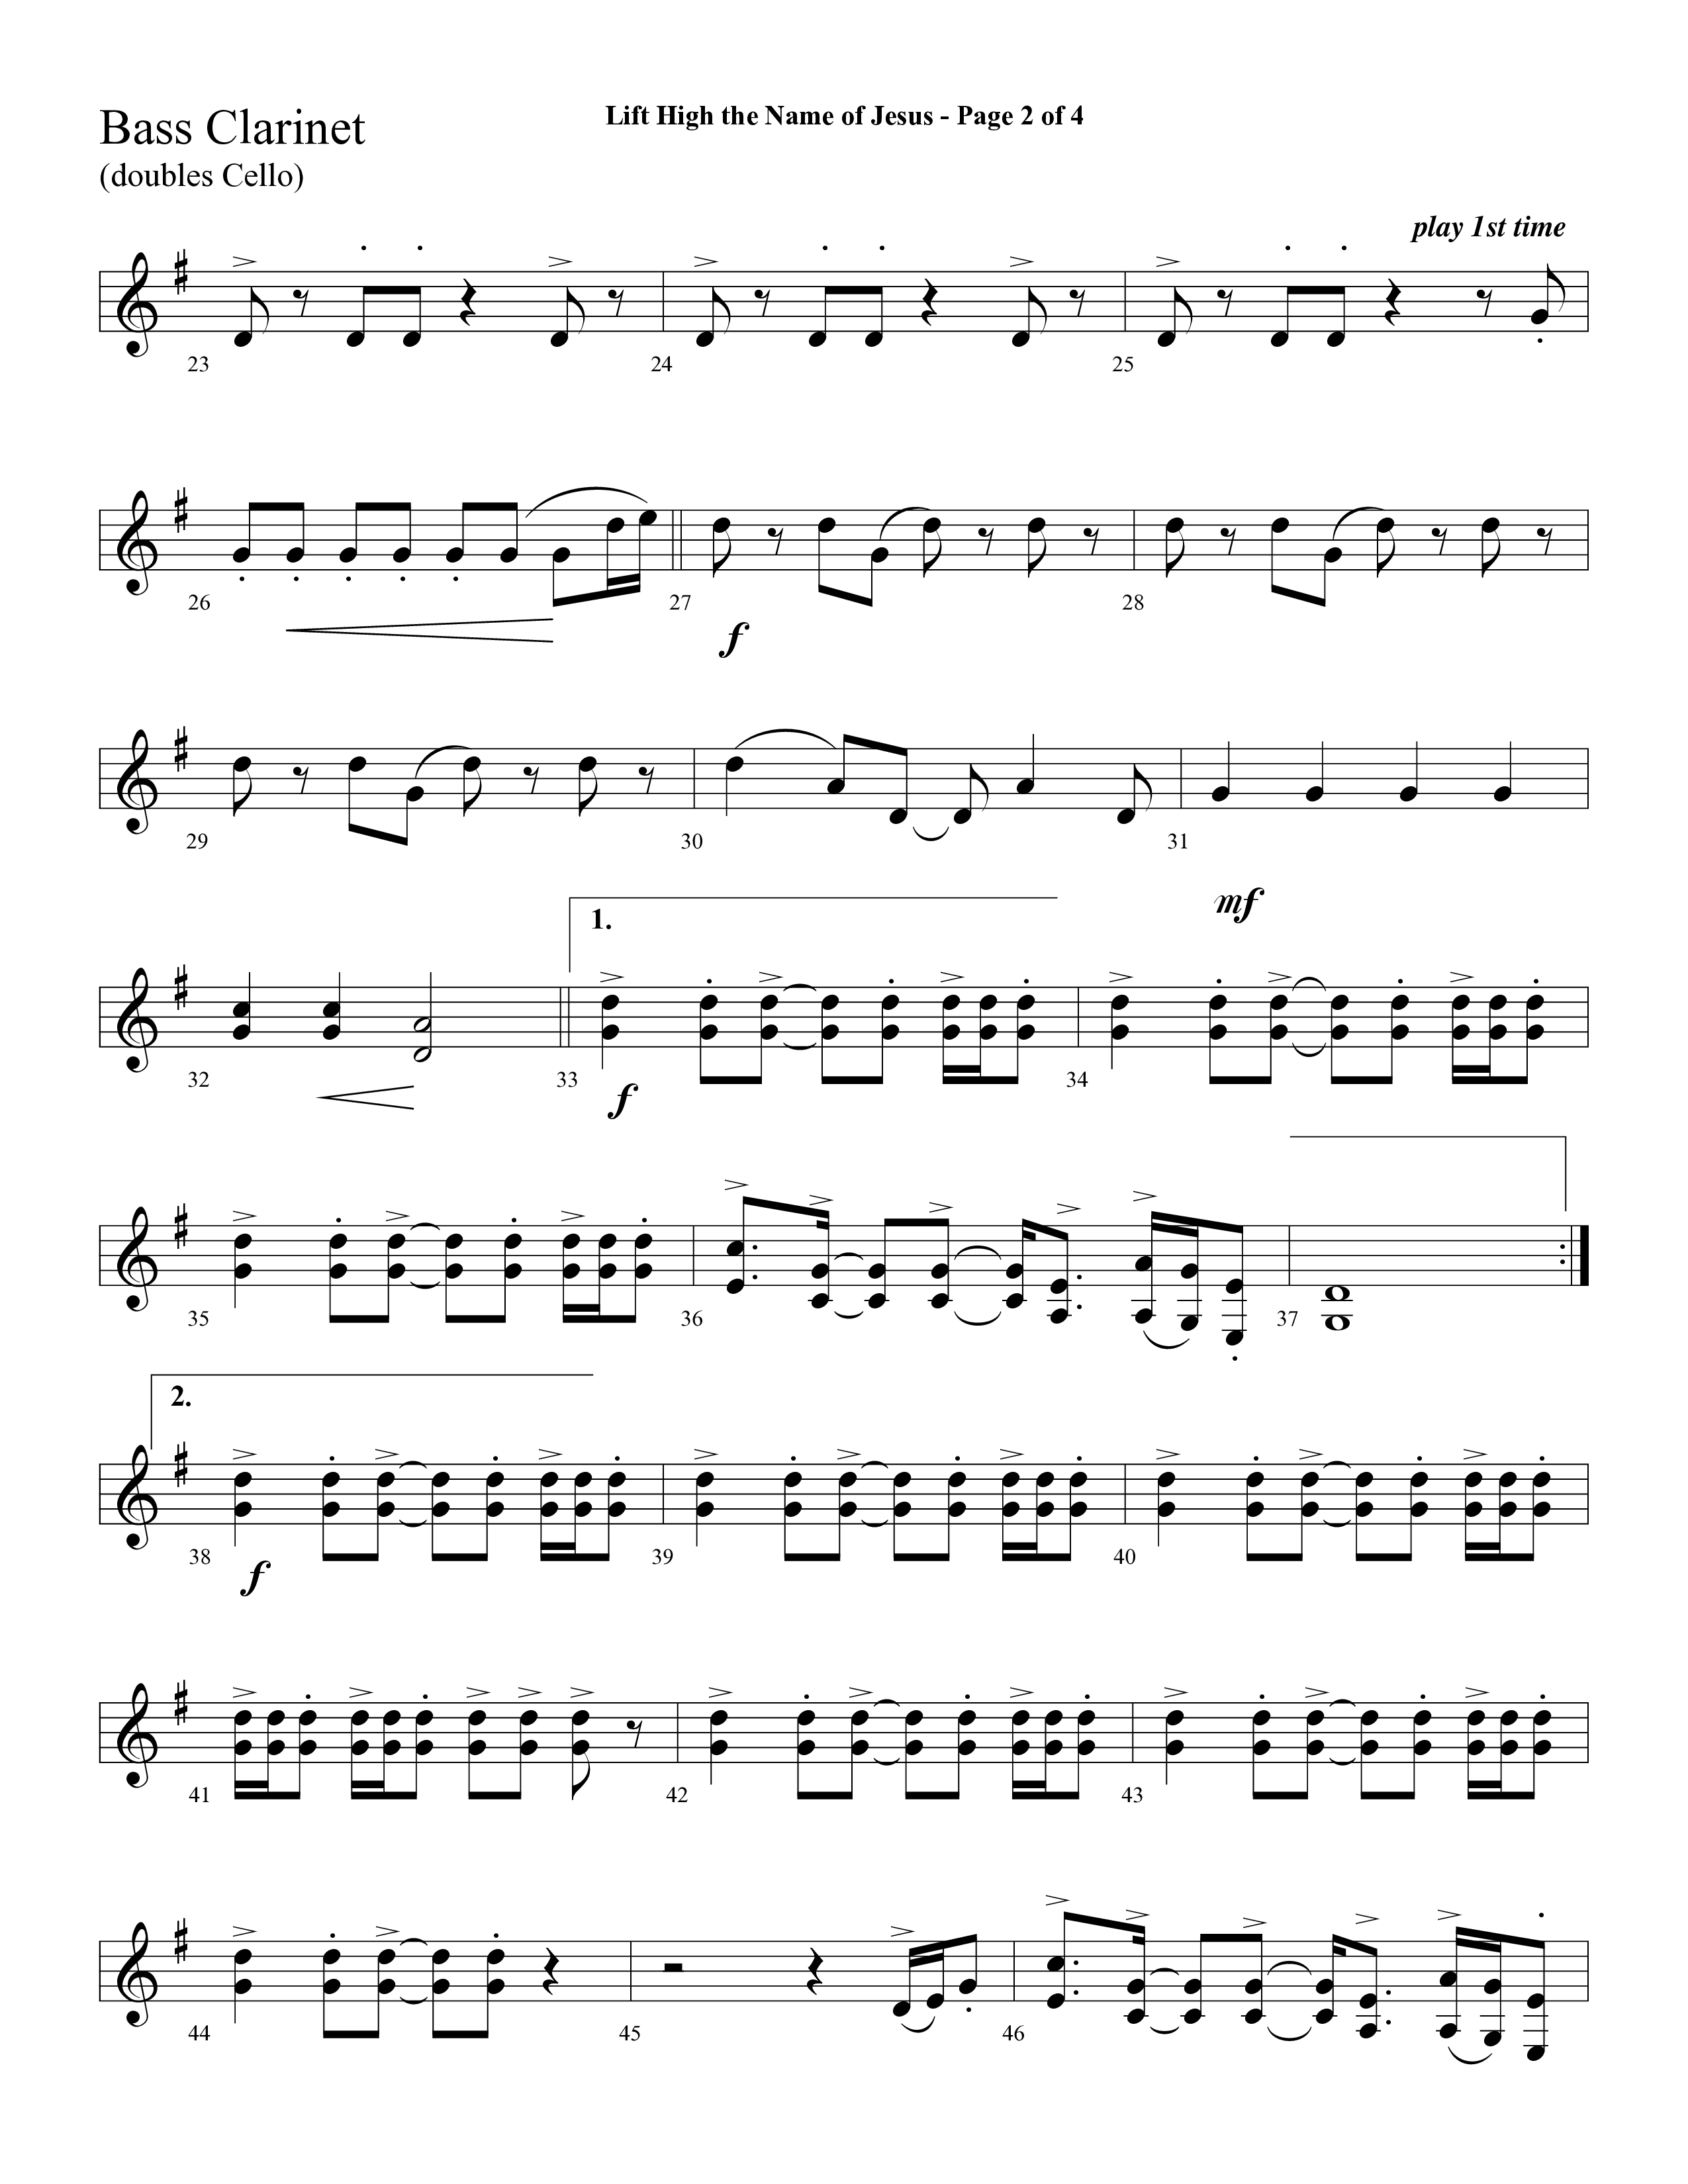 Lift High The Name Of Jesus (Choral Anthem SATB) Bass Clarinet (Lifeway Choral / Arr. David Hamilton)